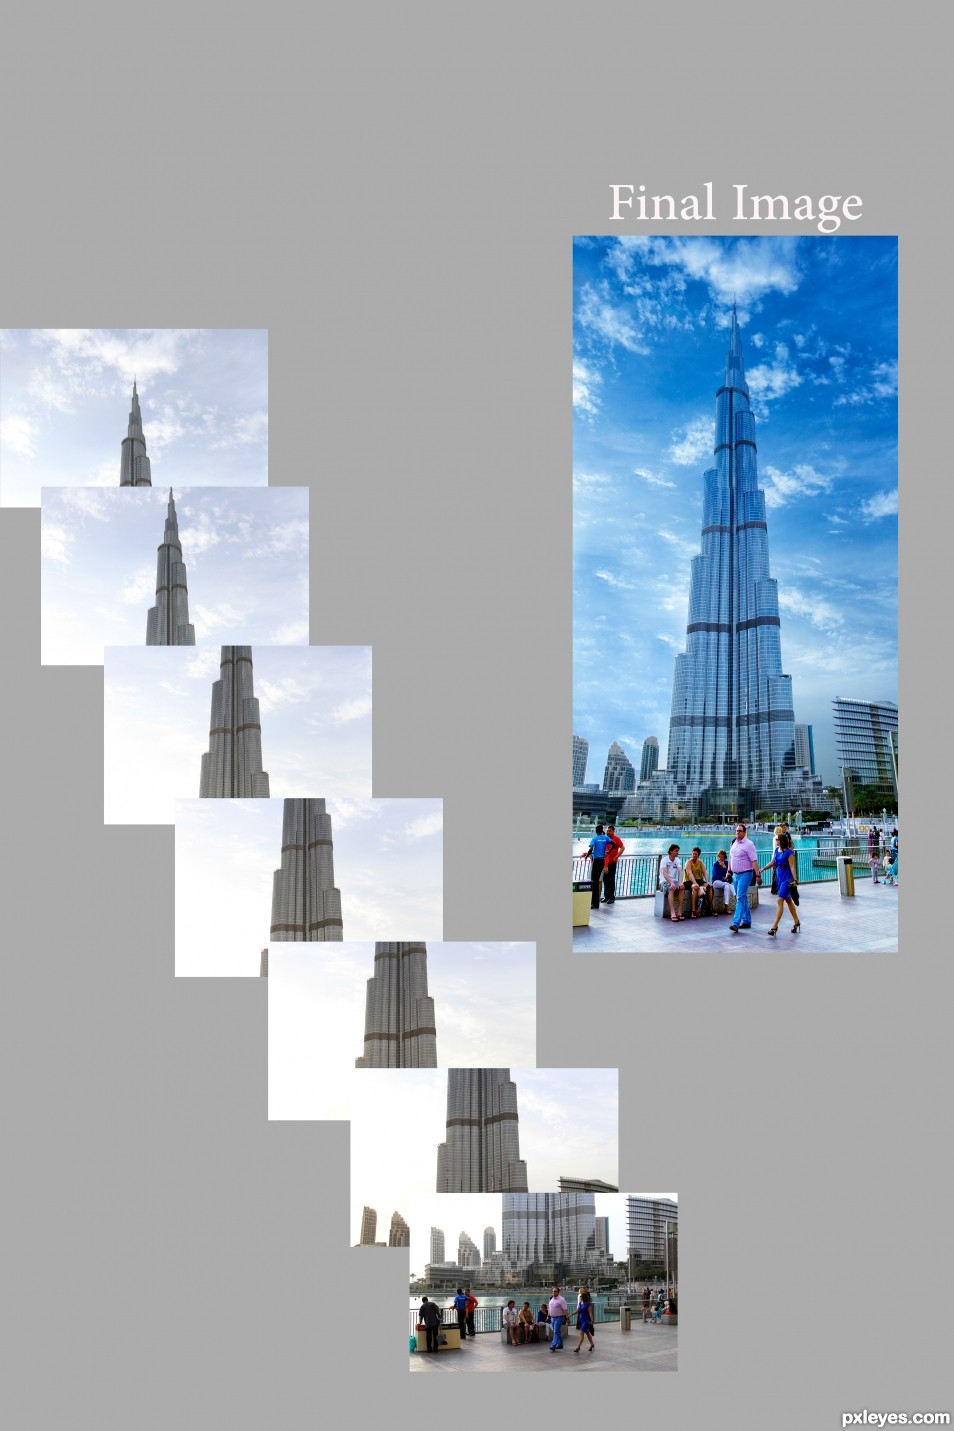 Creation of World's largest - Burj Al khalifa: Step 1